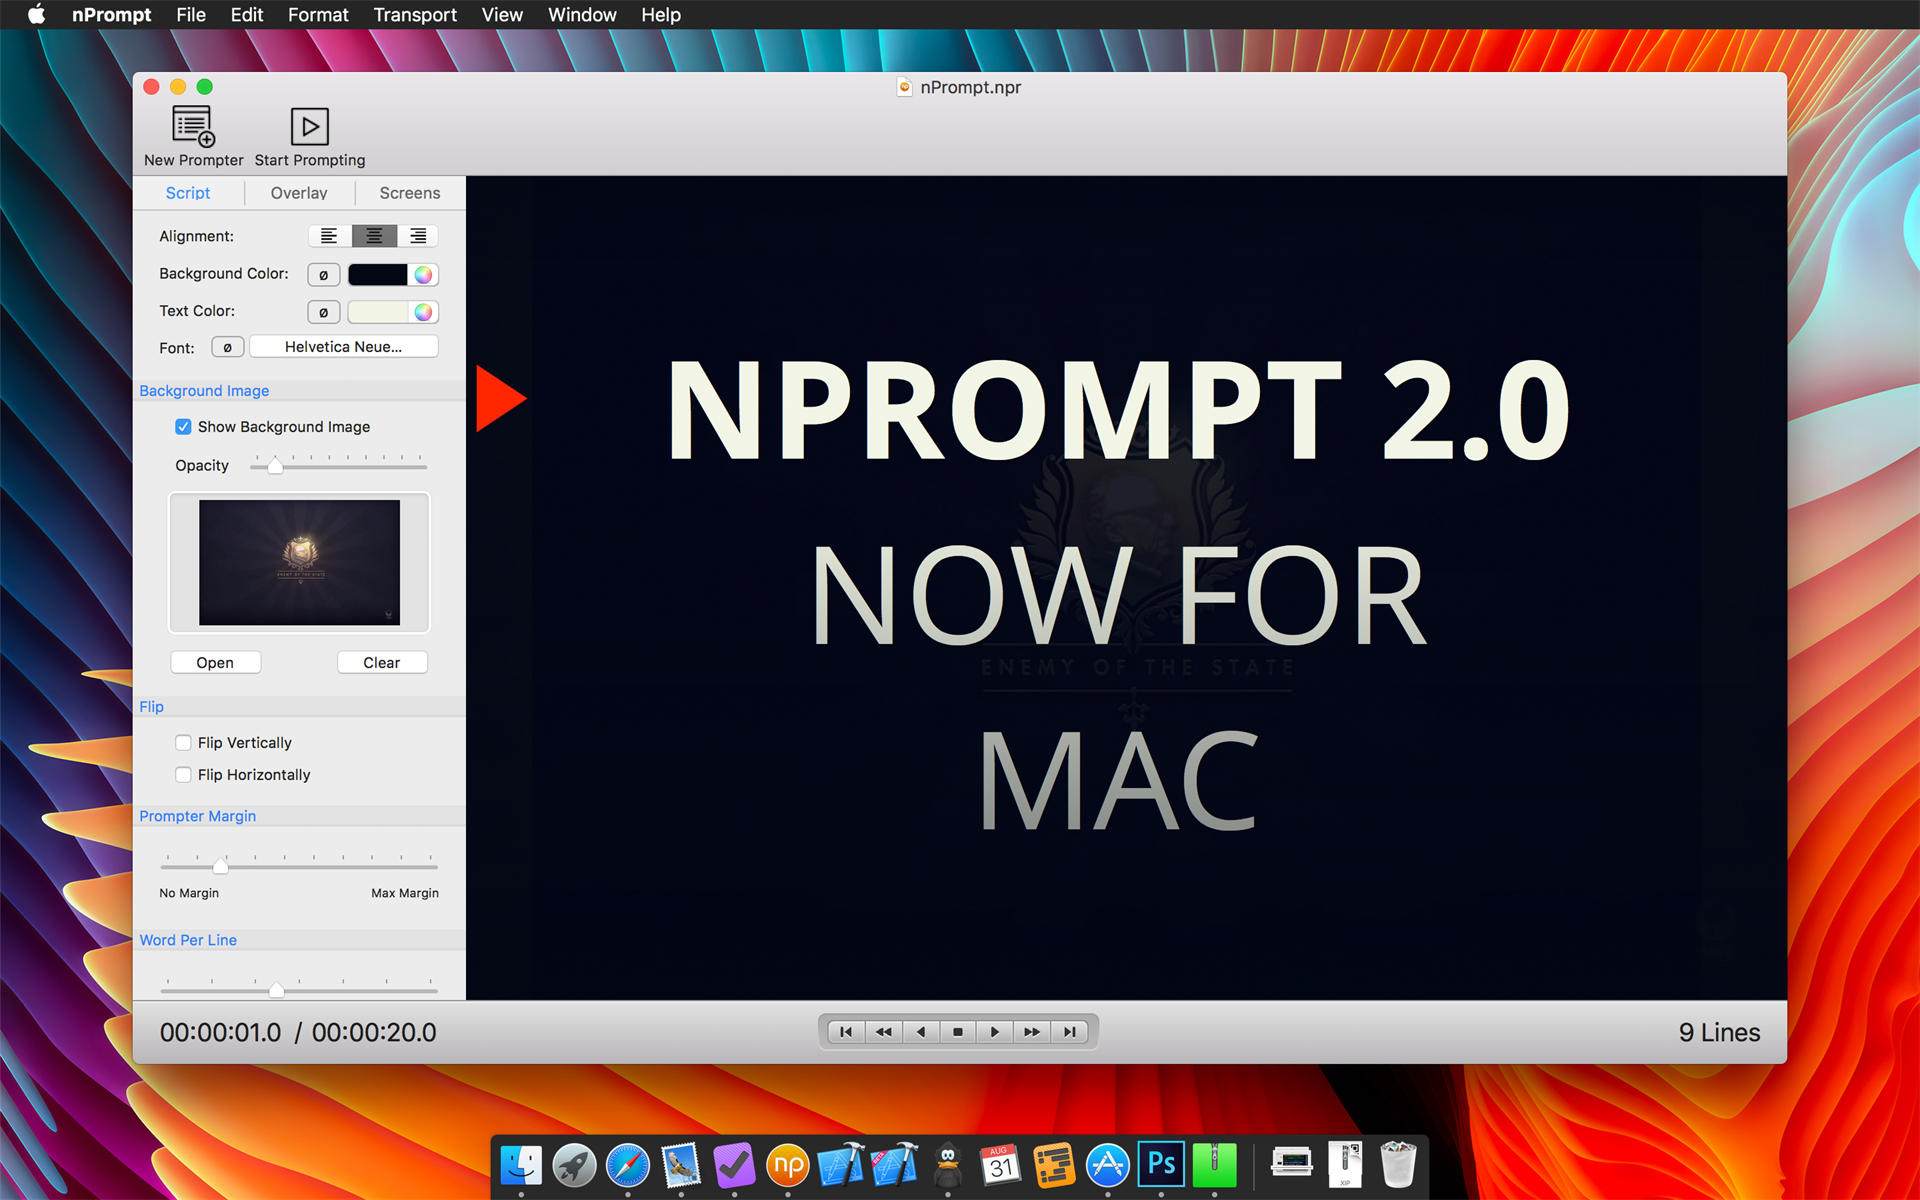 teleprompter app mac